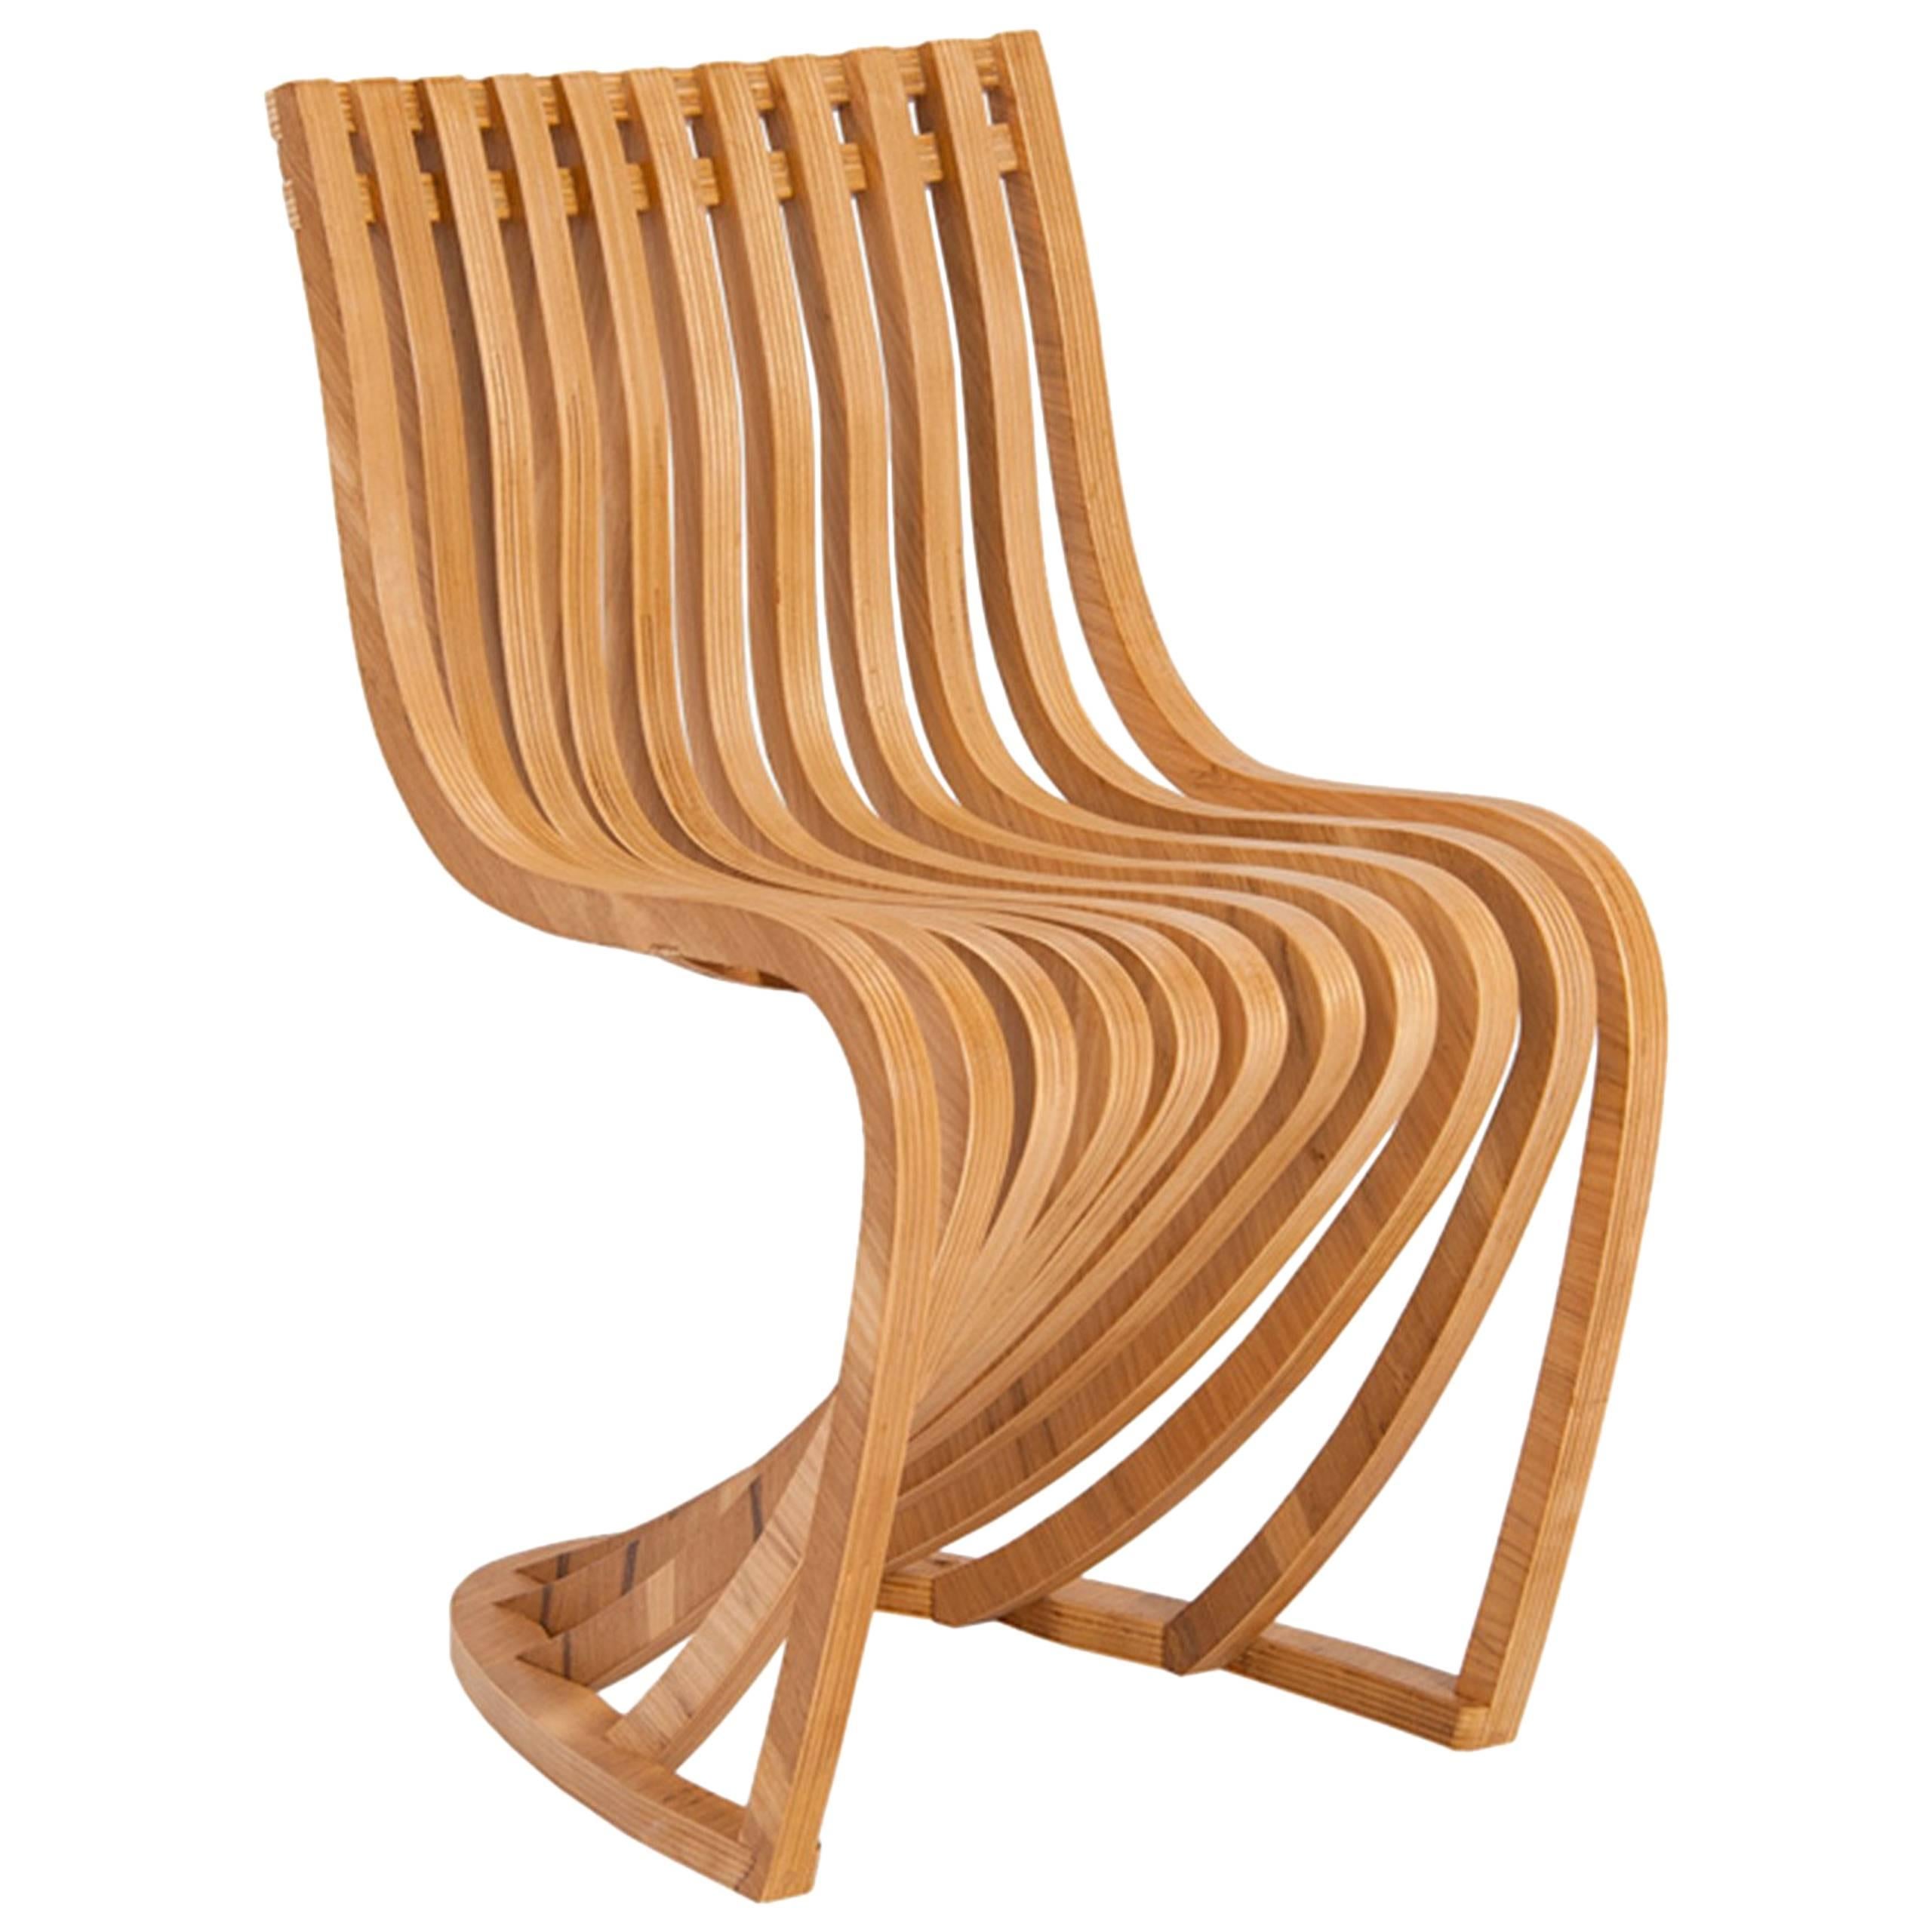 Pantosh Brazilian Contemporary Wood Chair by Lattoog